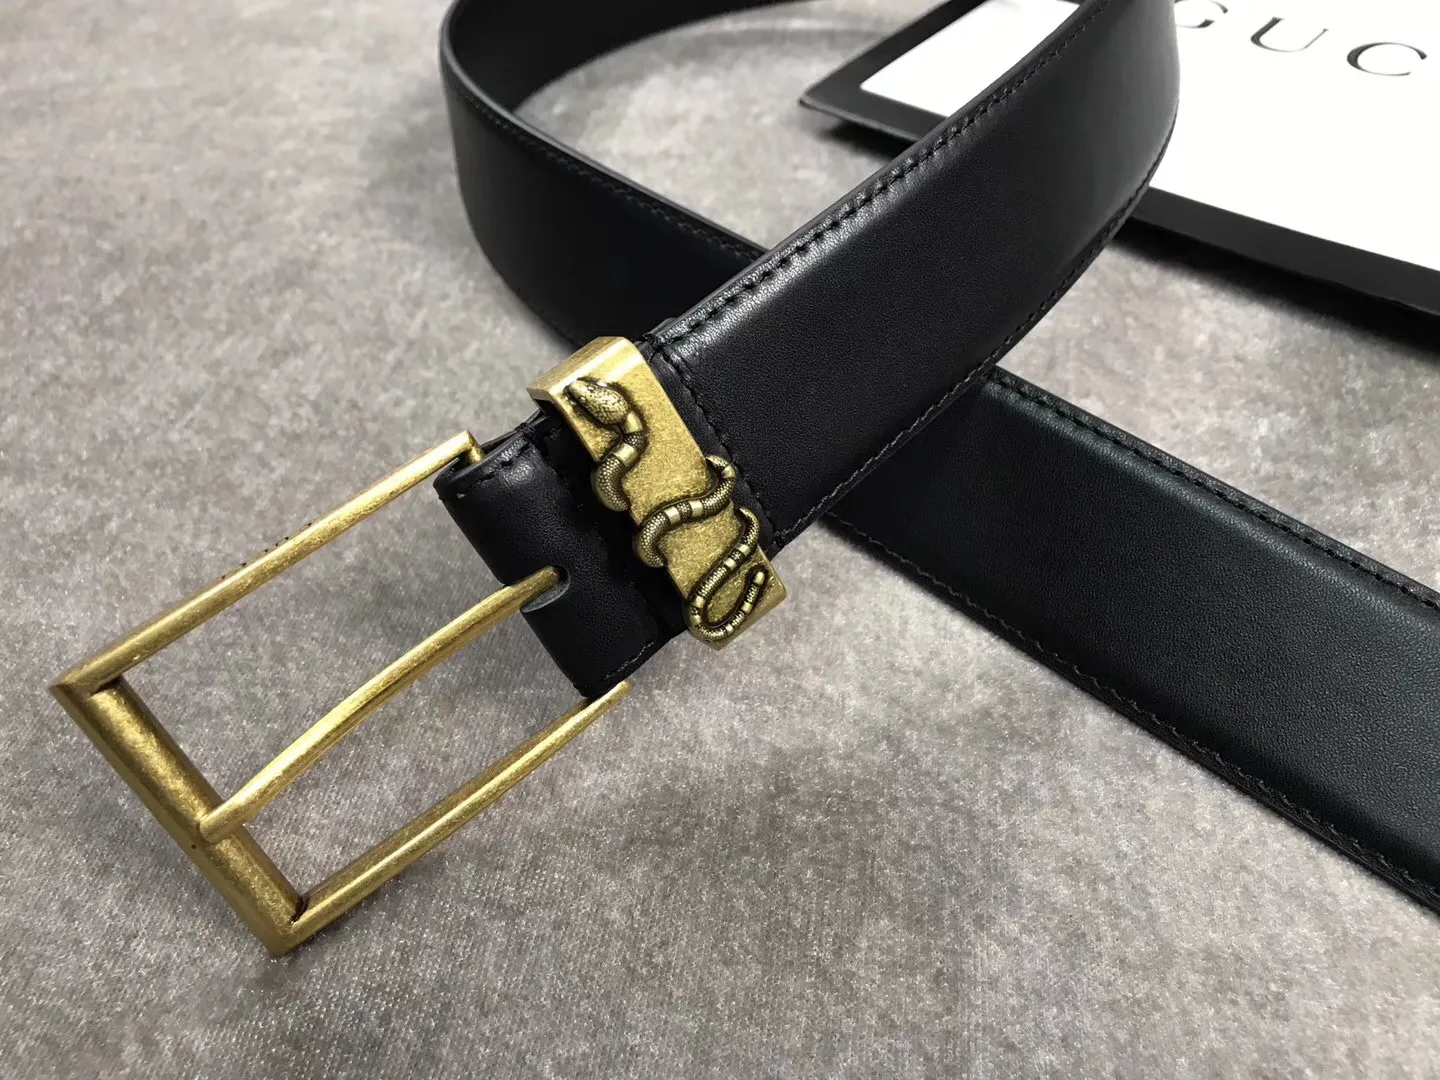 2020 selling snake pattern Silver buckle 2018 Spring and summer fashion genuine leather mens womens belt designer belts for gi284a